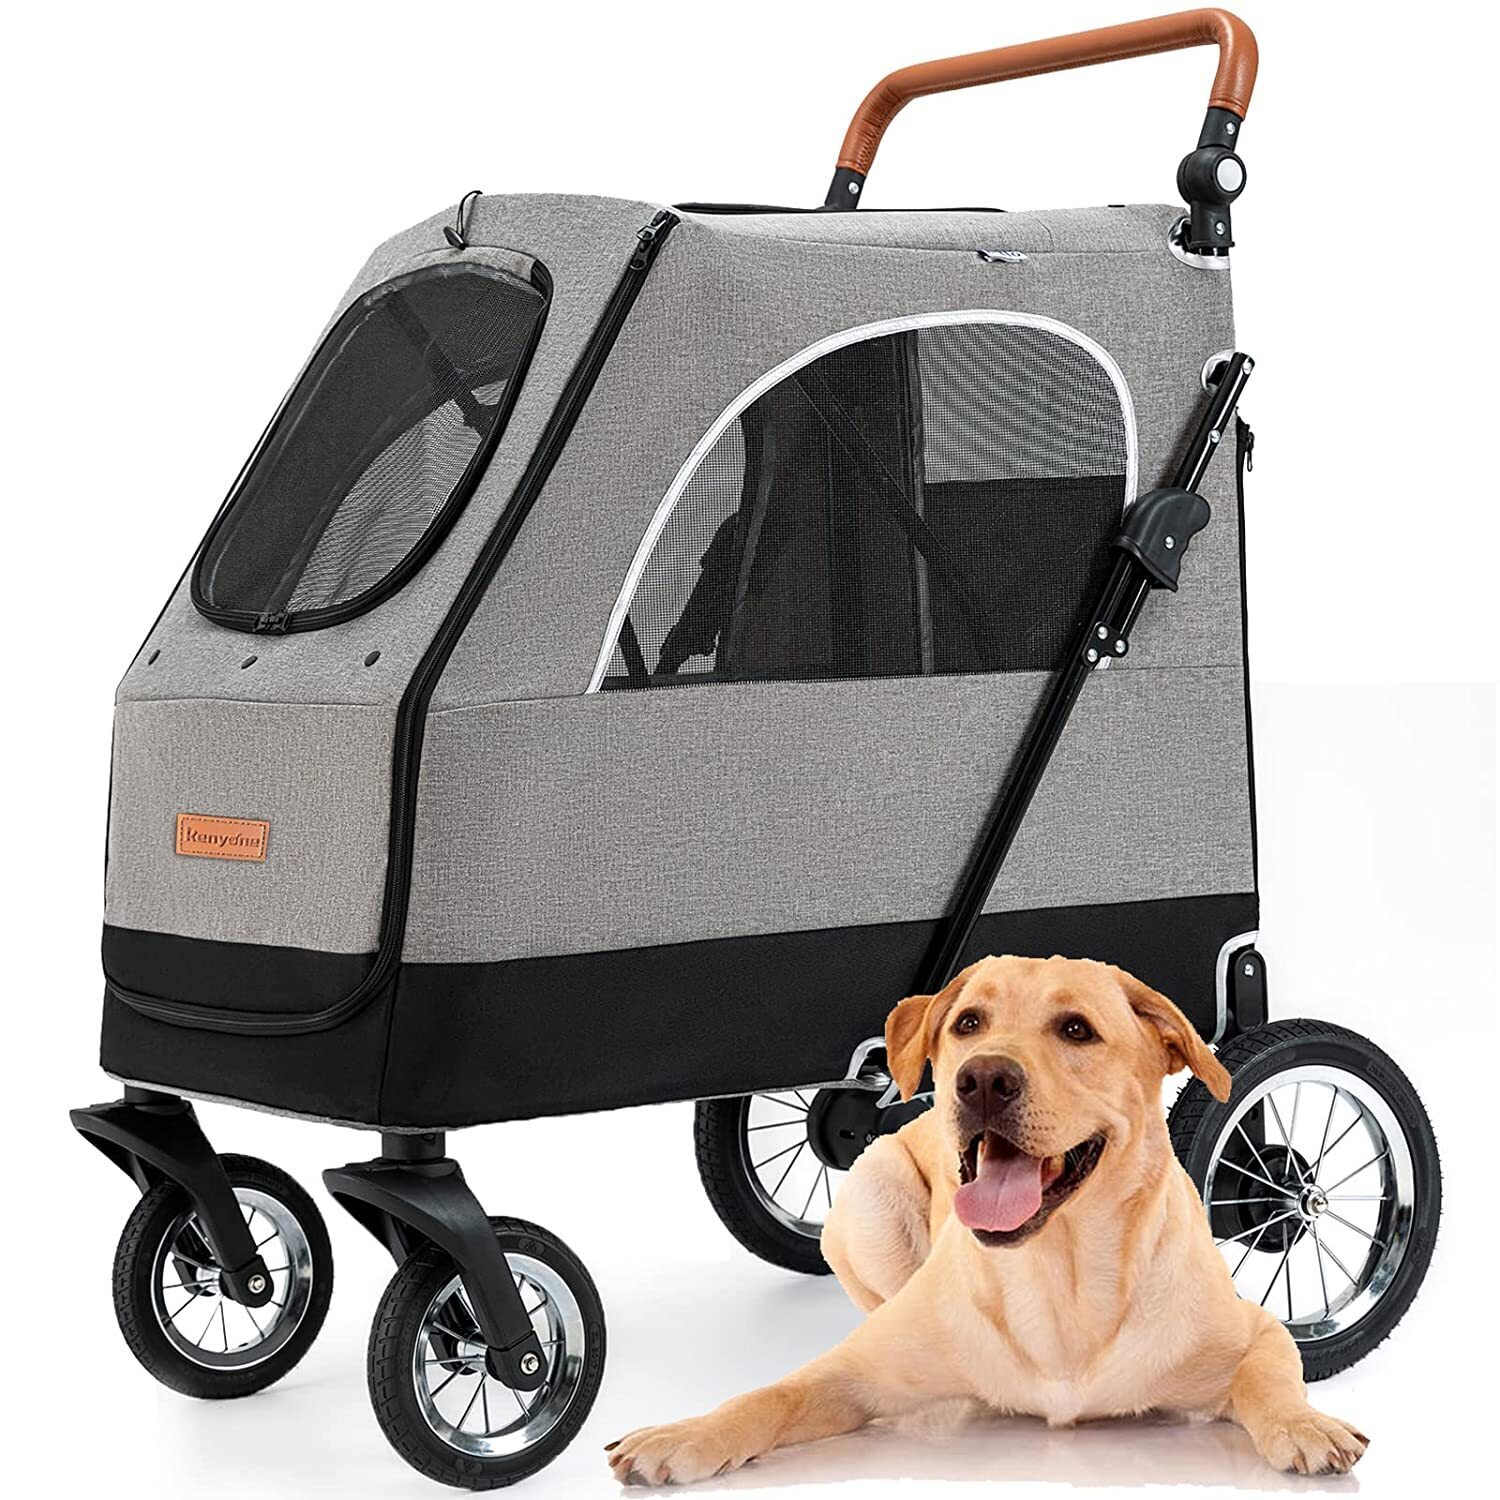 Premium Oxford Cloth Extra Large Dog Stroller